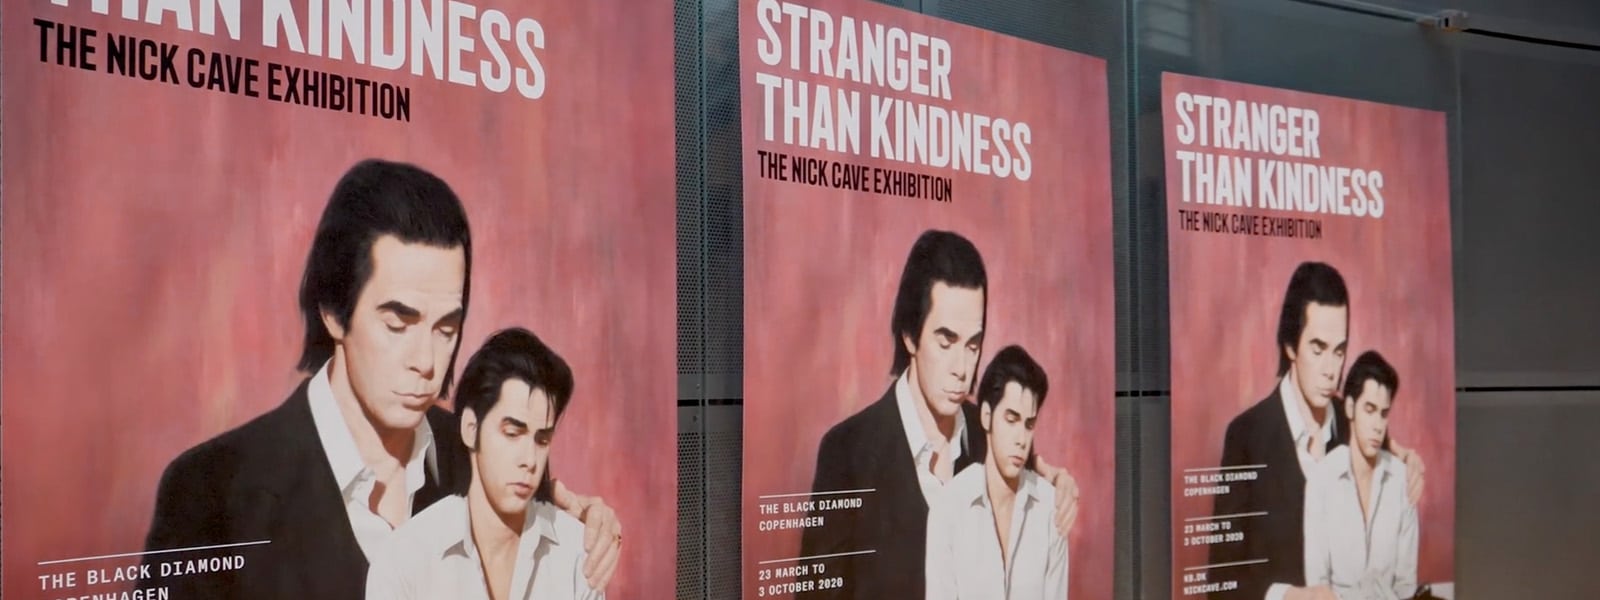 Nick Cave: Stranger Than Kindness